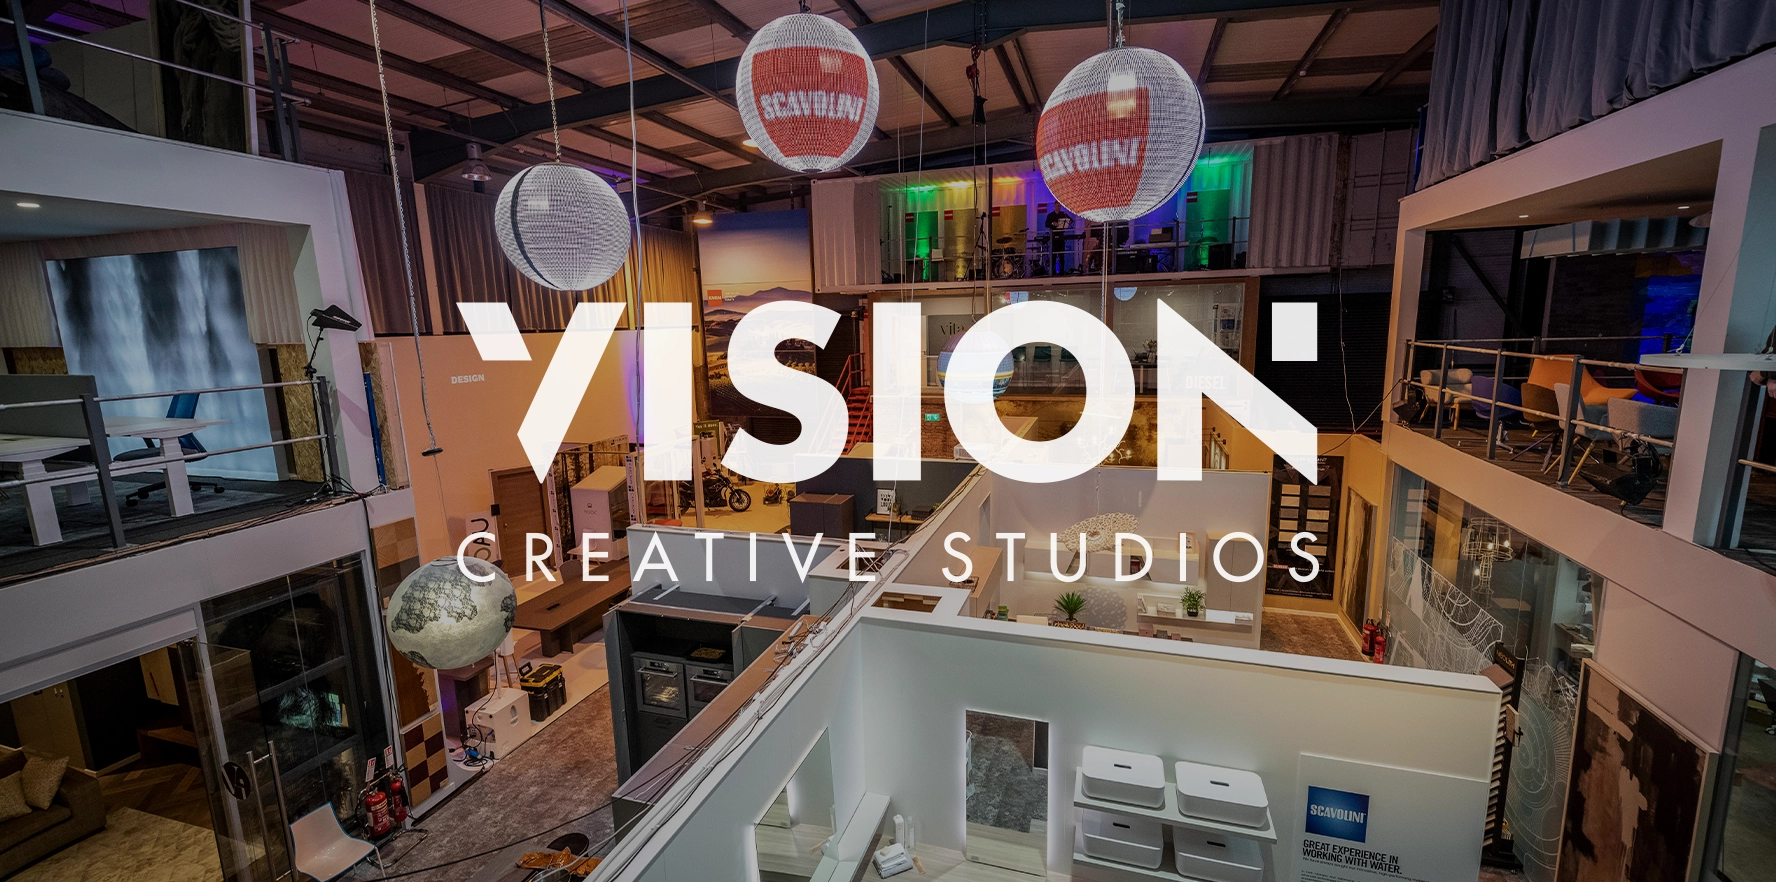 Vision creative studios